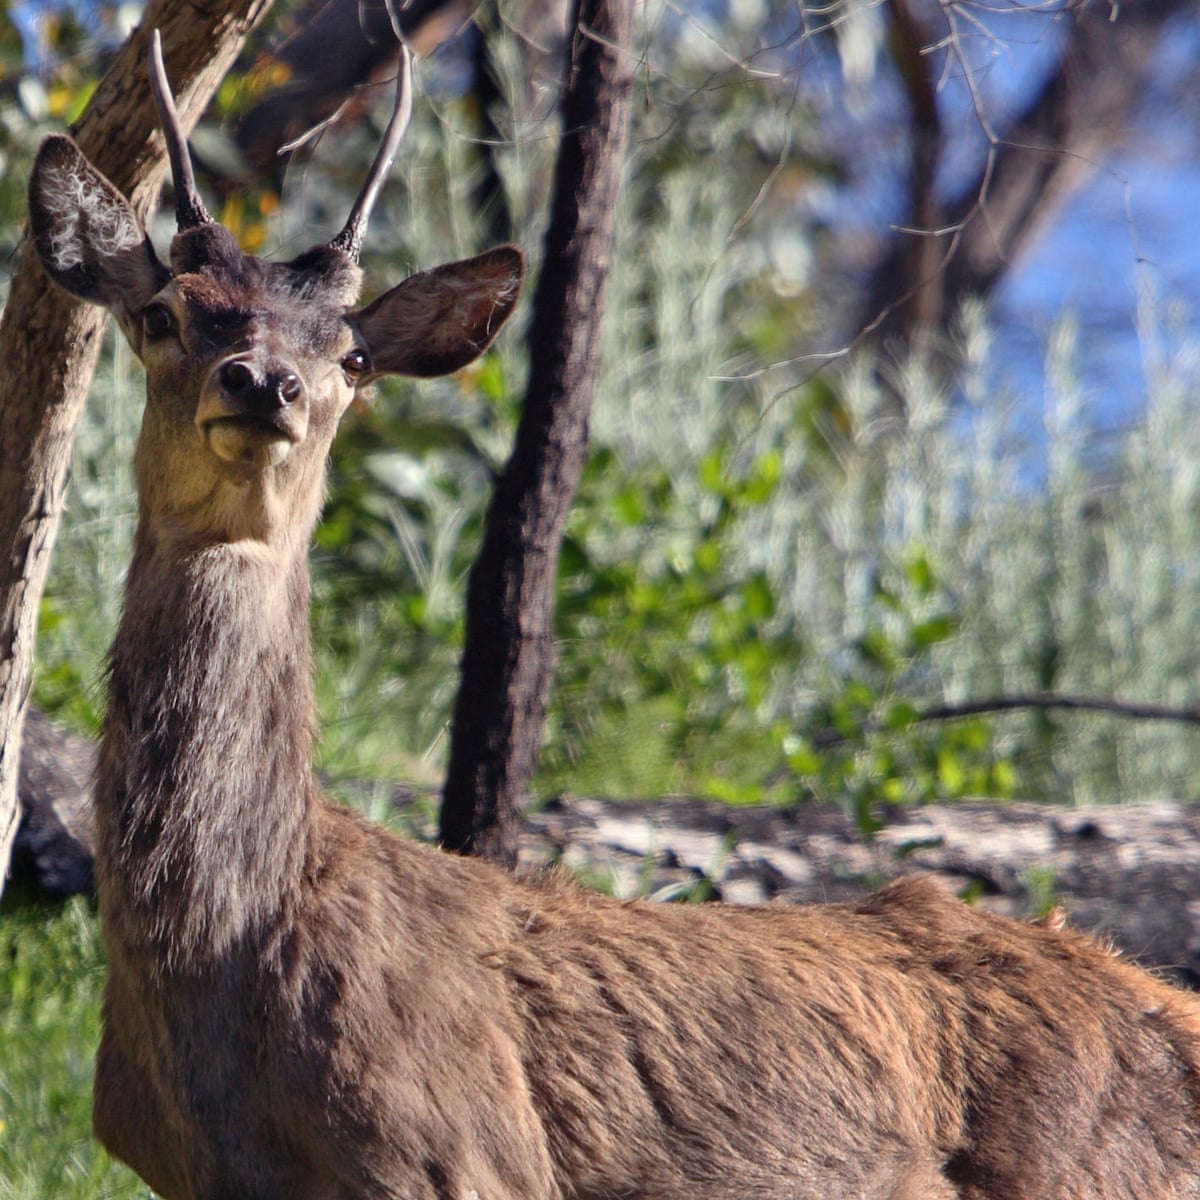 Protecting Native Species: The Battle Against Invasive Deer in Australia